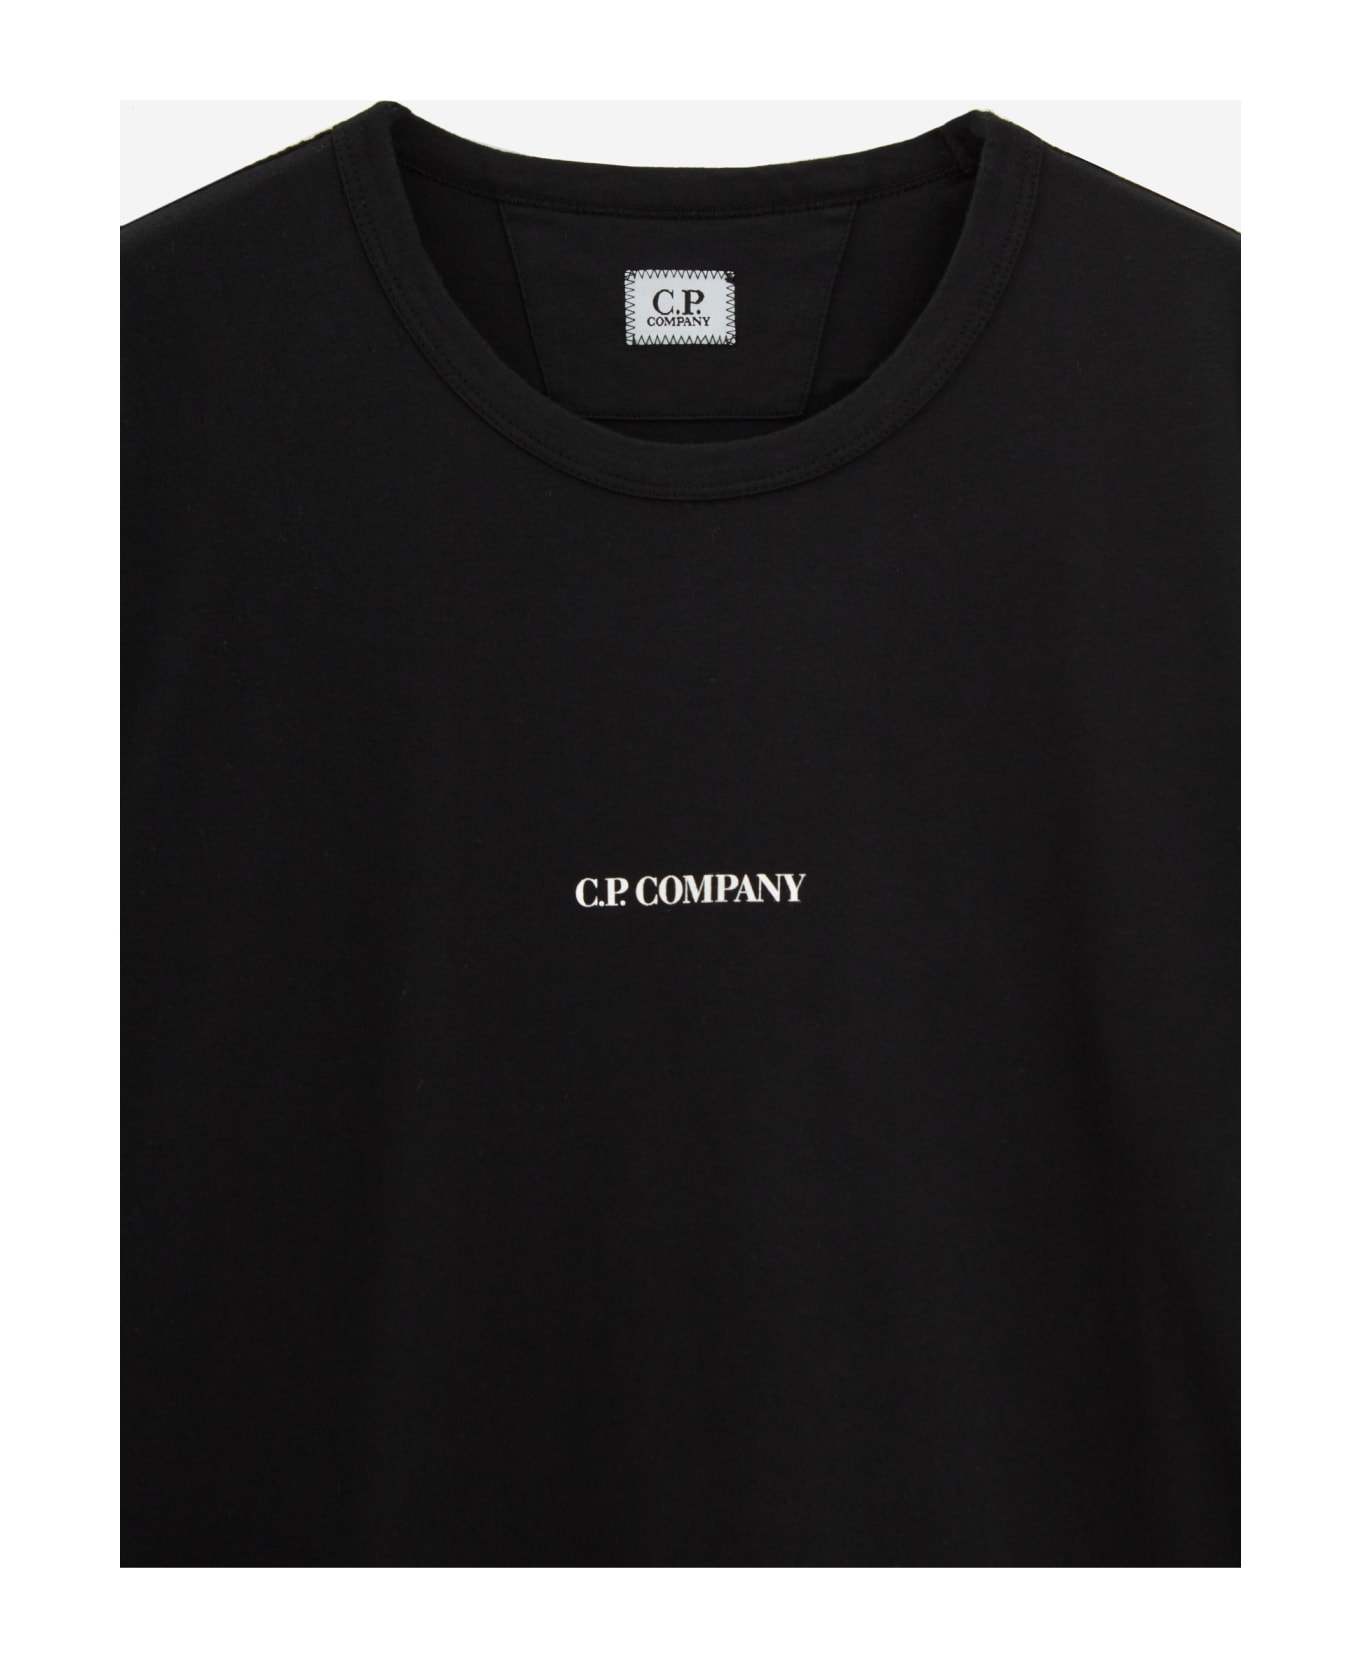 C.P. Company T-shirt - black